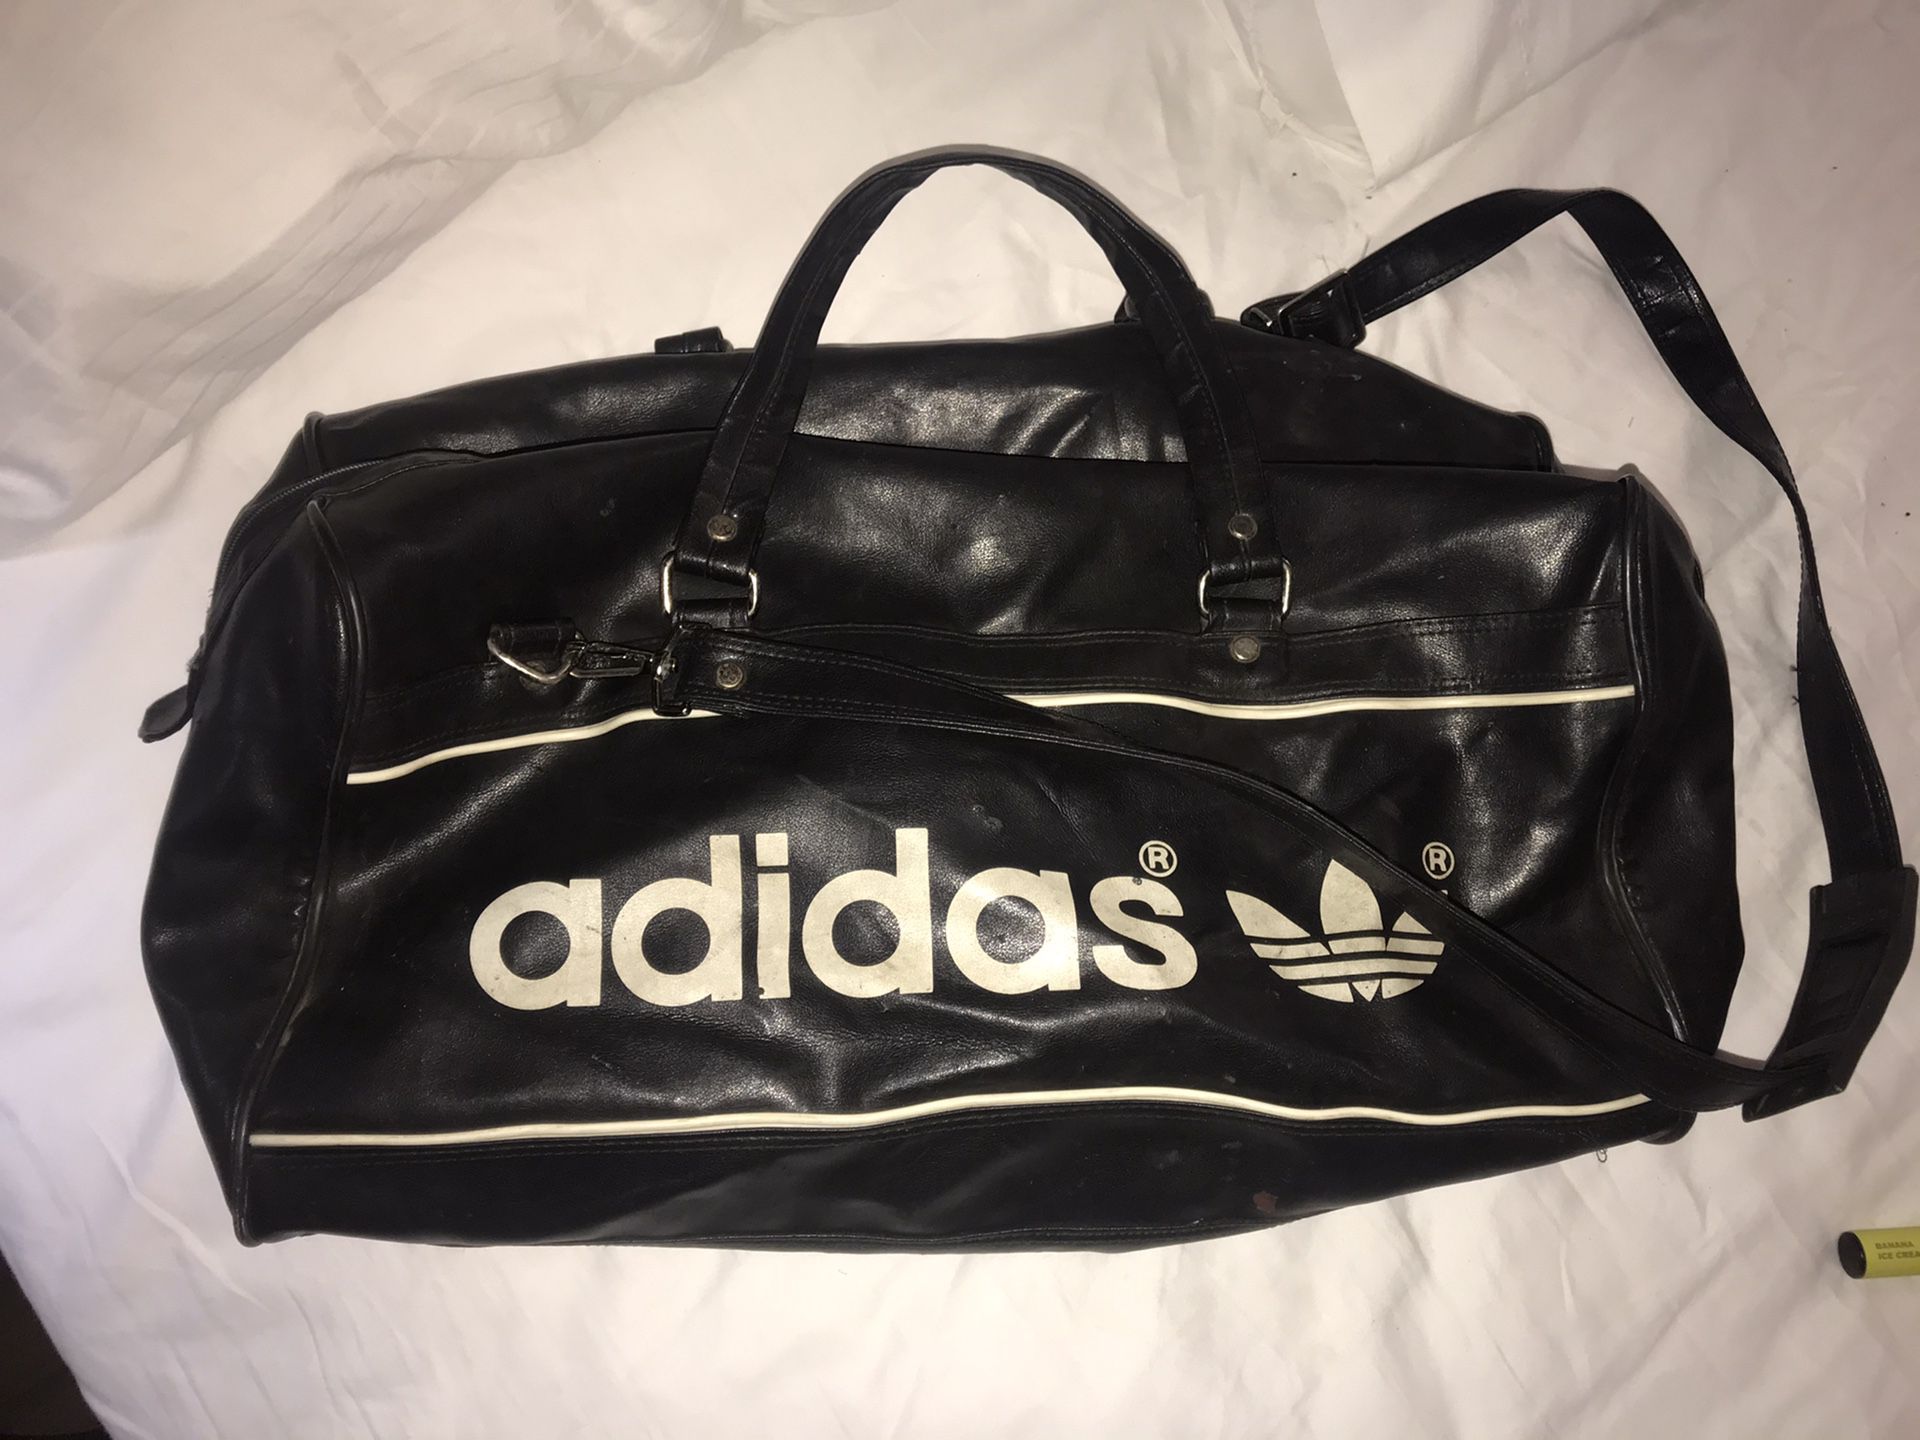 Authentic Adidas duffle bag